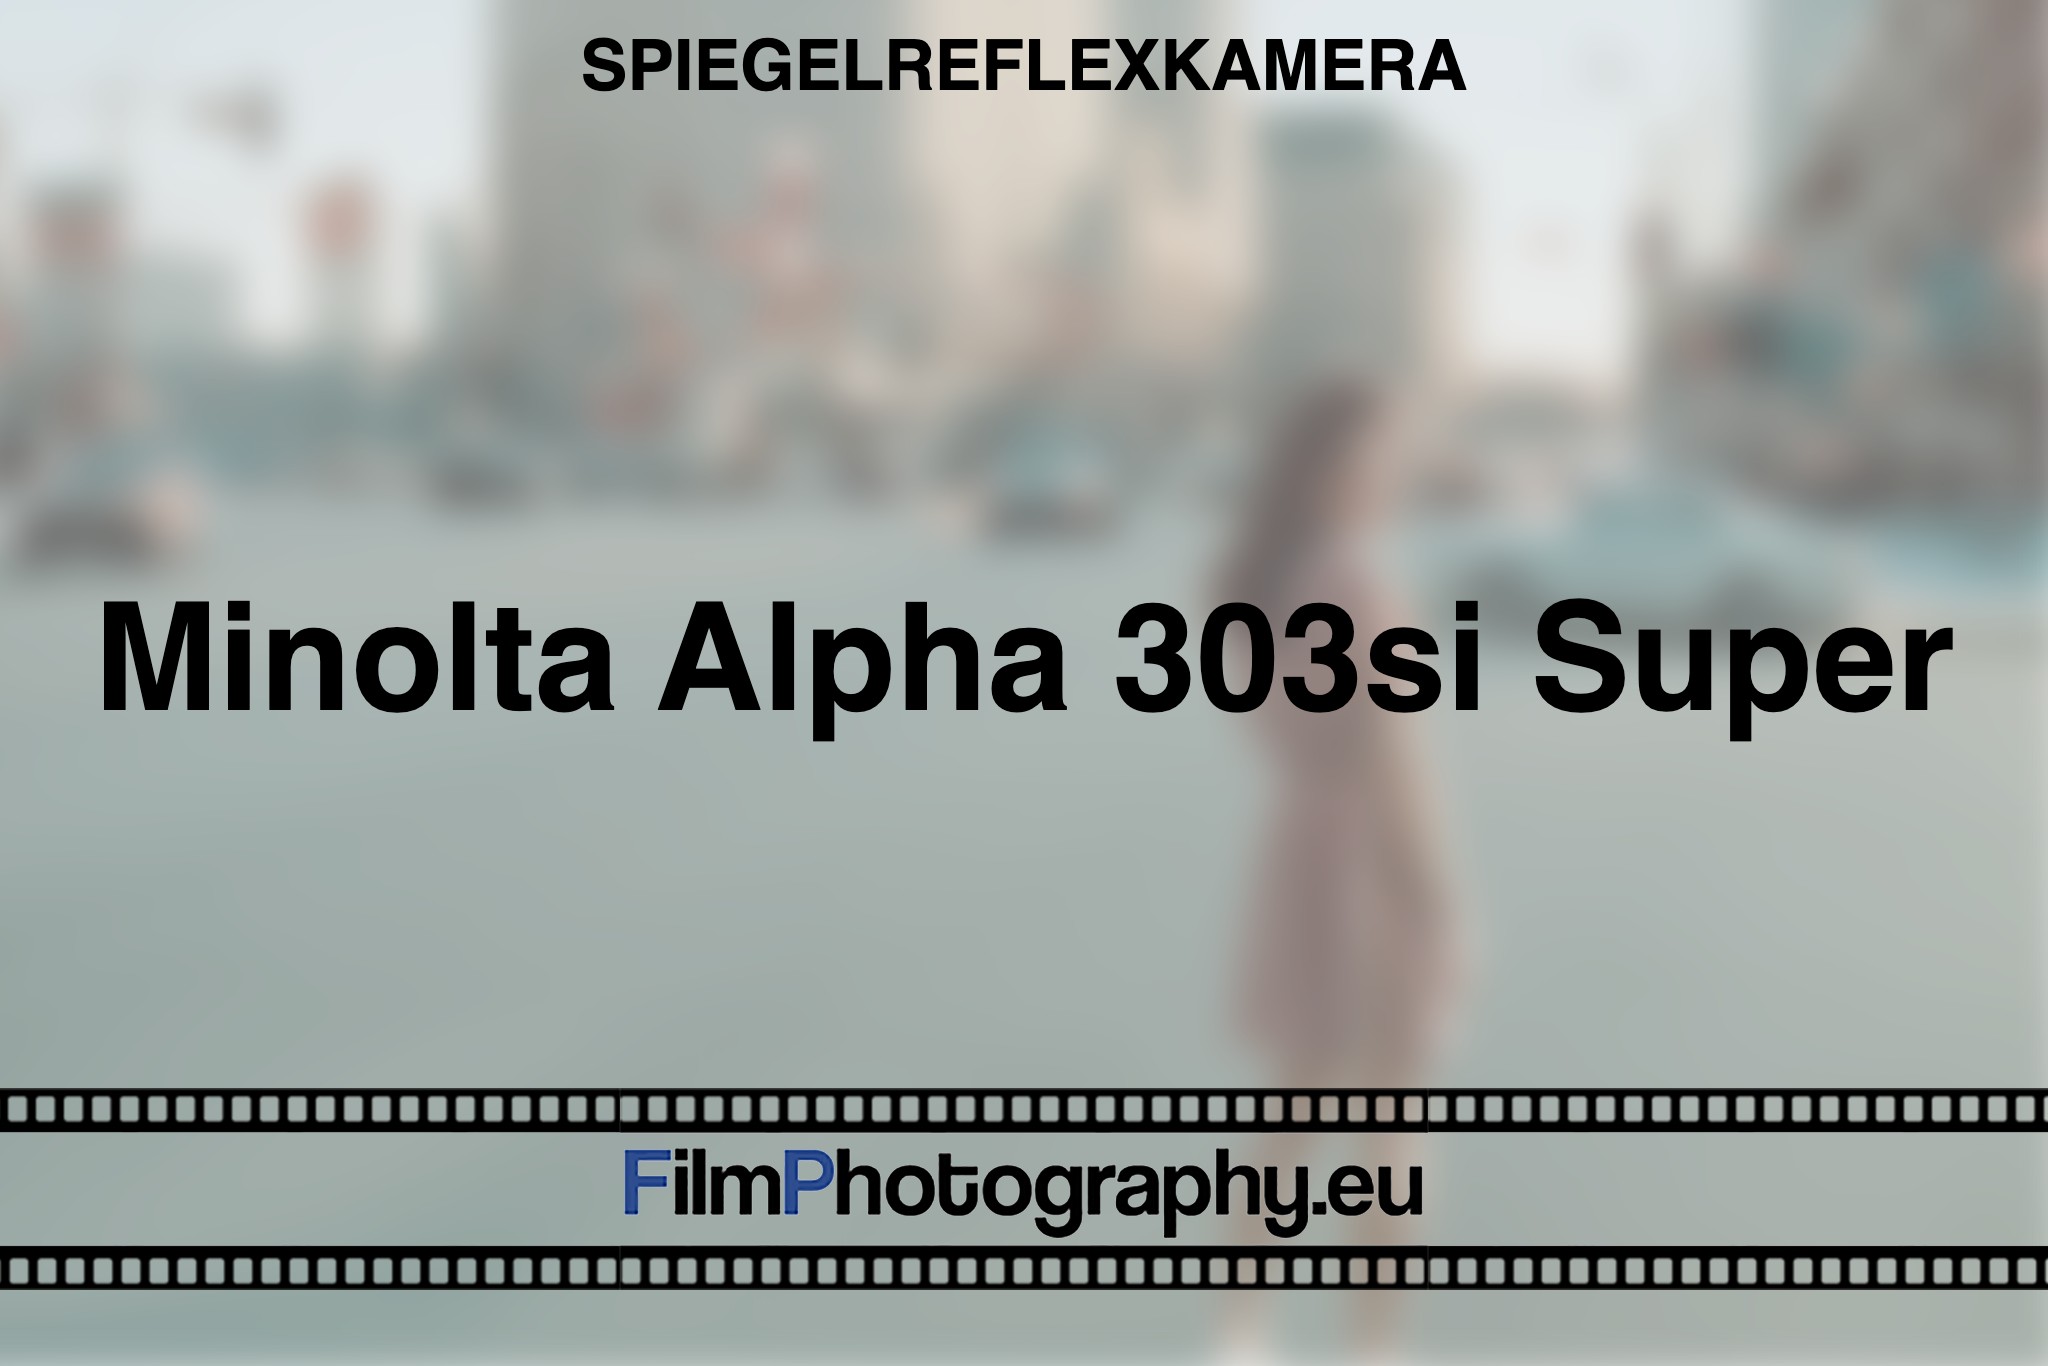 minolta-alpha-303si-super-spiegelreflexkamera-bnv